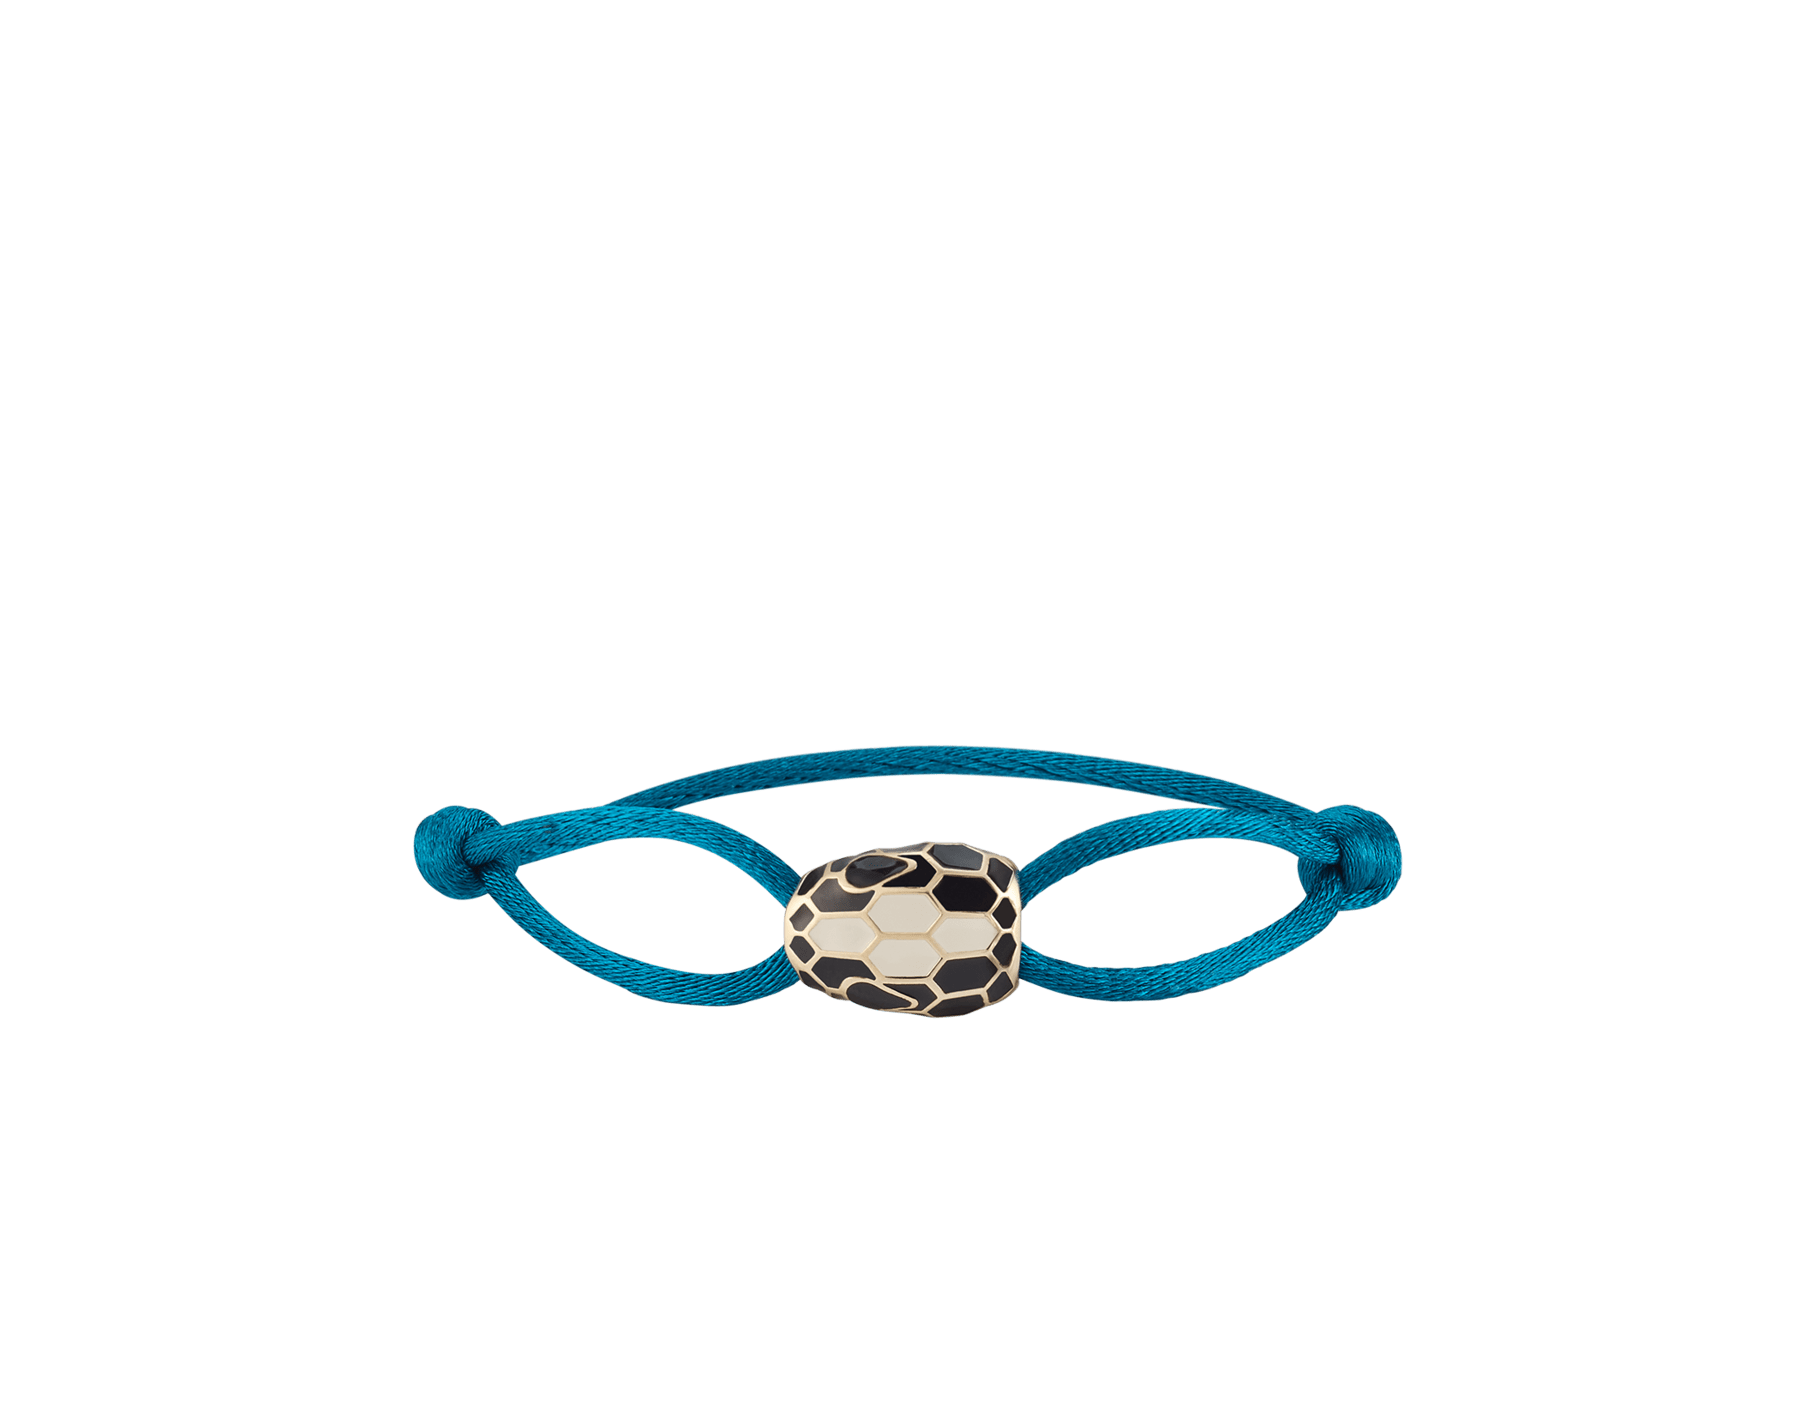 Football Bracelet Personalized Football Bracelet/ Football Jewelry/ Football  Mom Bracelet/stretchy Bracelet 